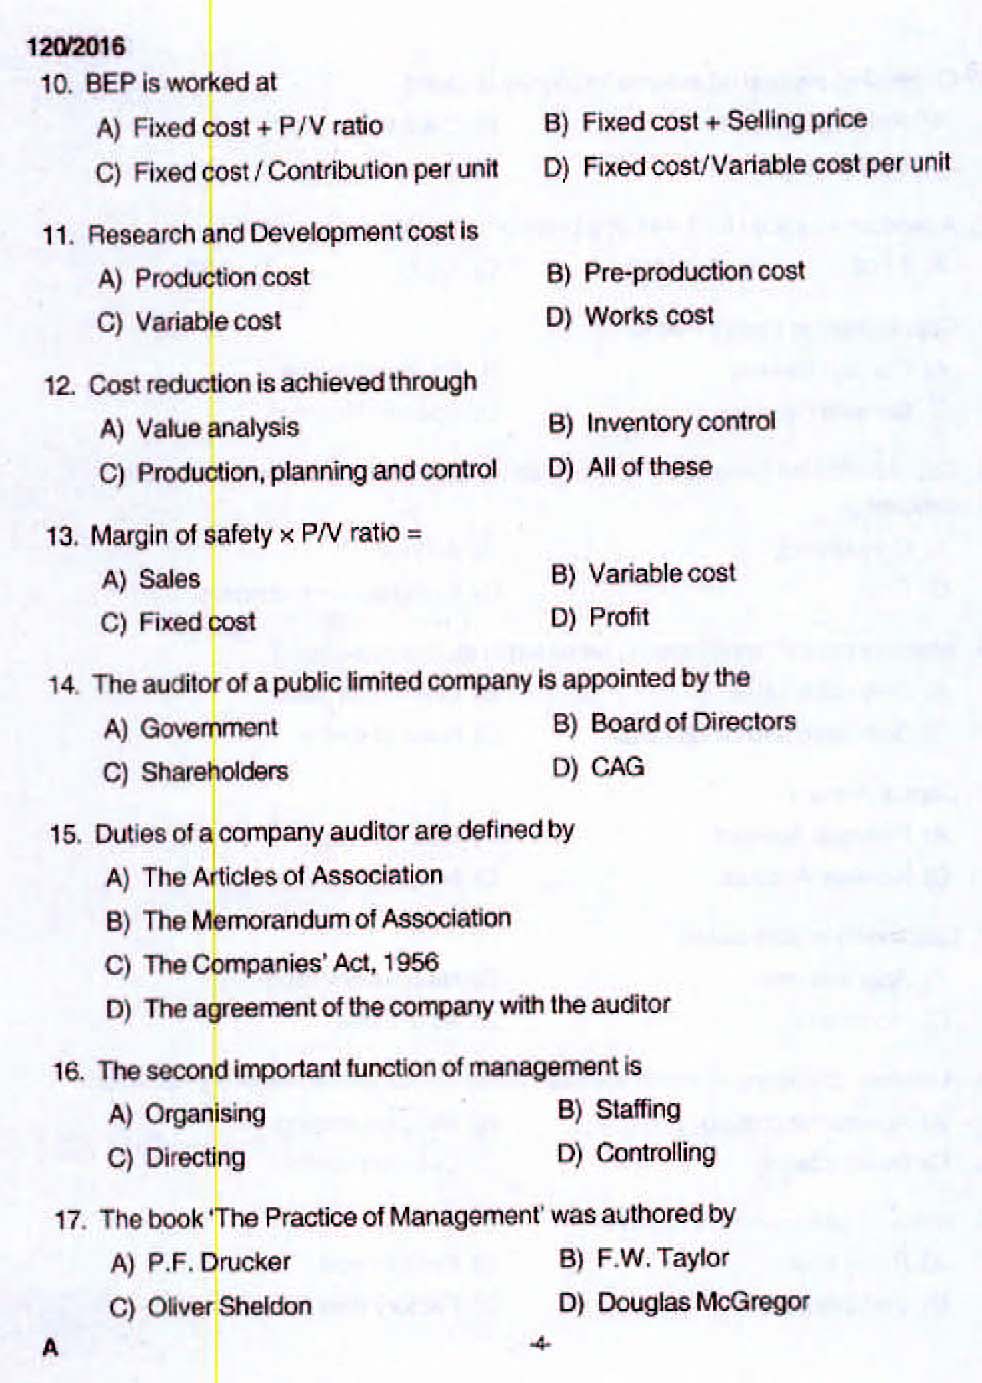 Kerala PSC Accountant Grade III OMR Exam 2016 Question Paper Code 1202016 2